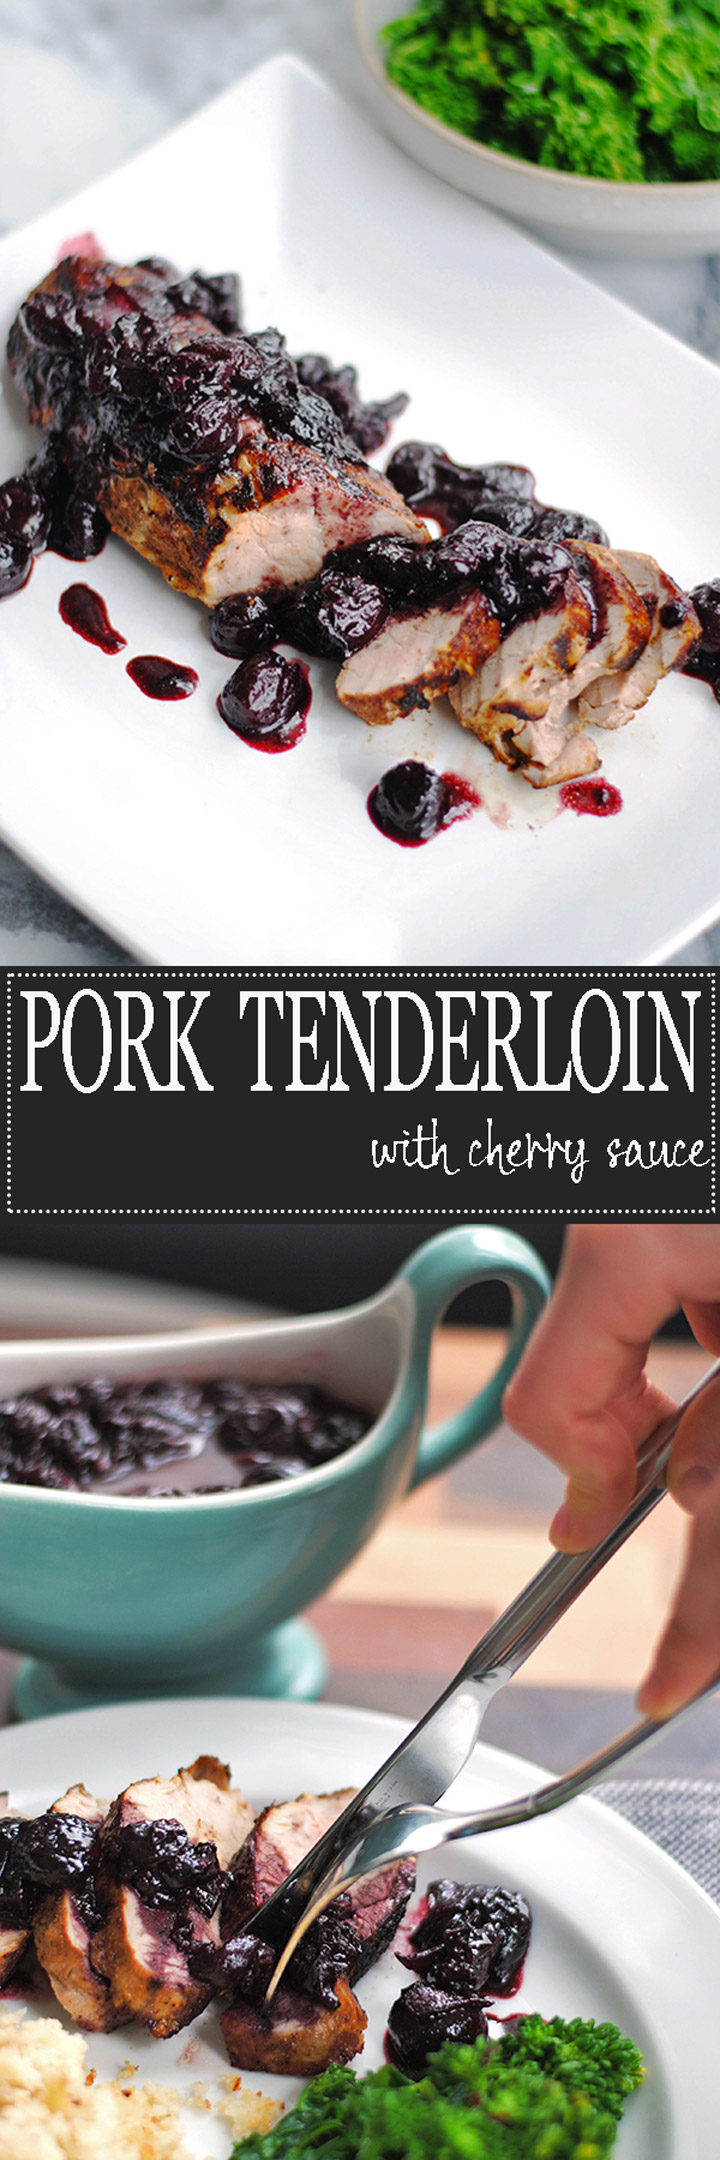 Pan Seared Pork Tenderloin with Cherry Sauce